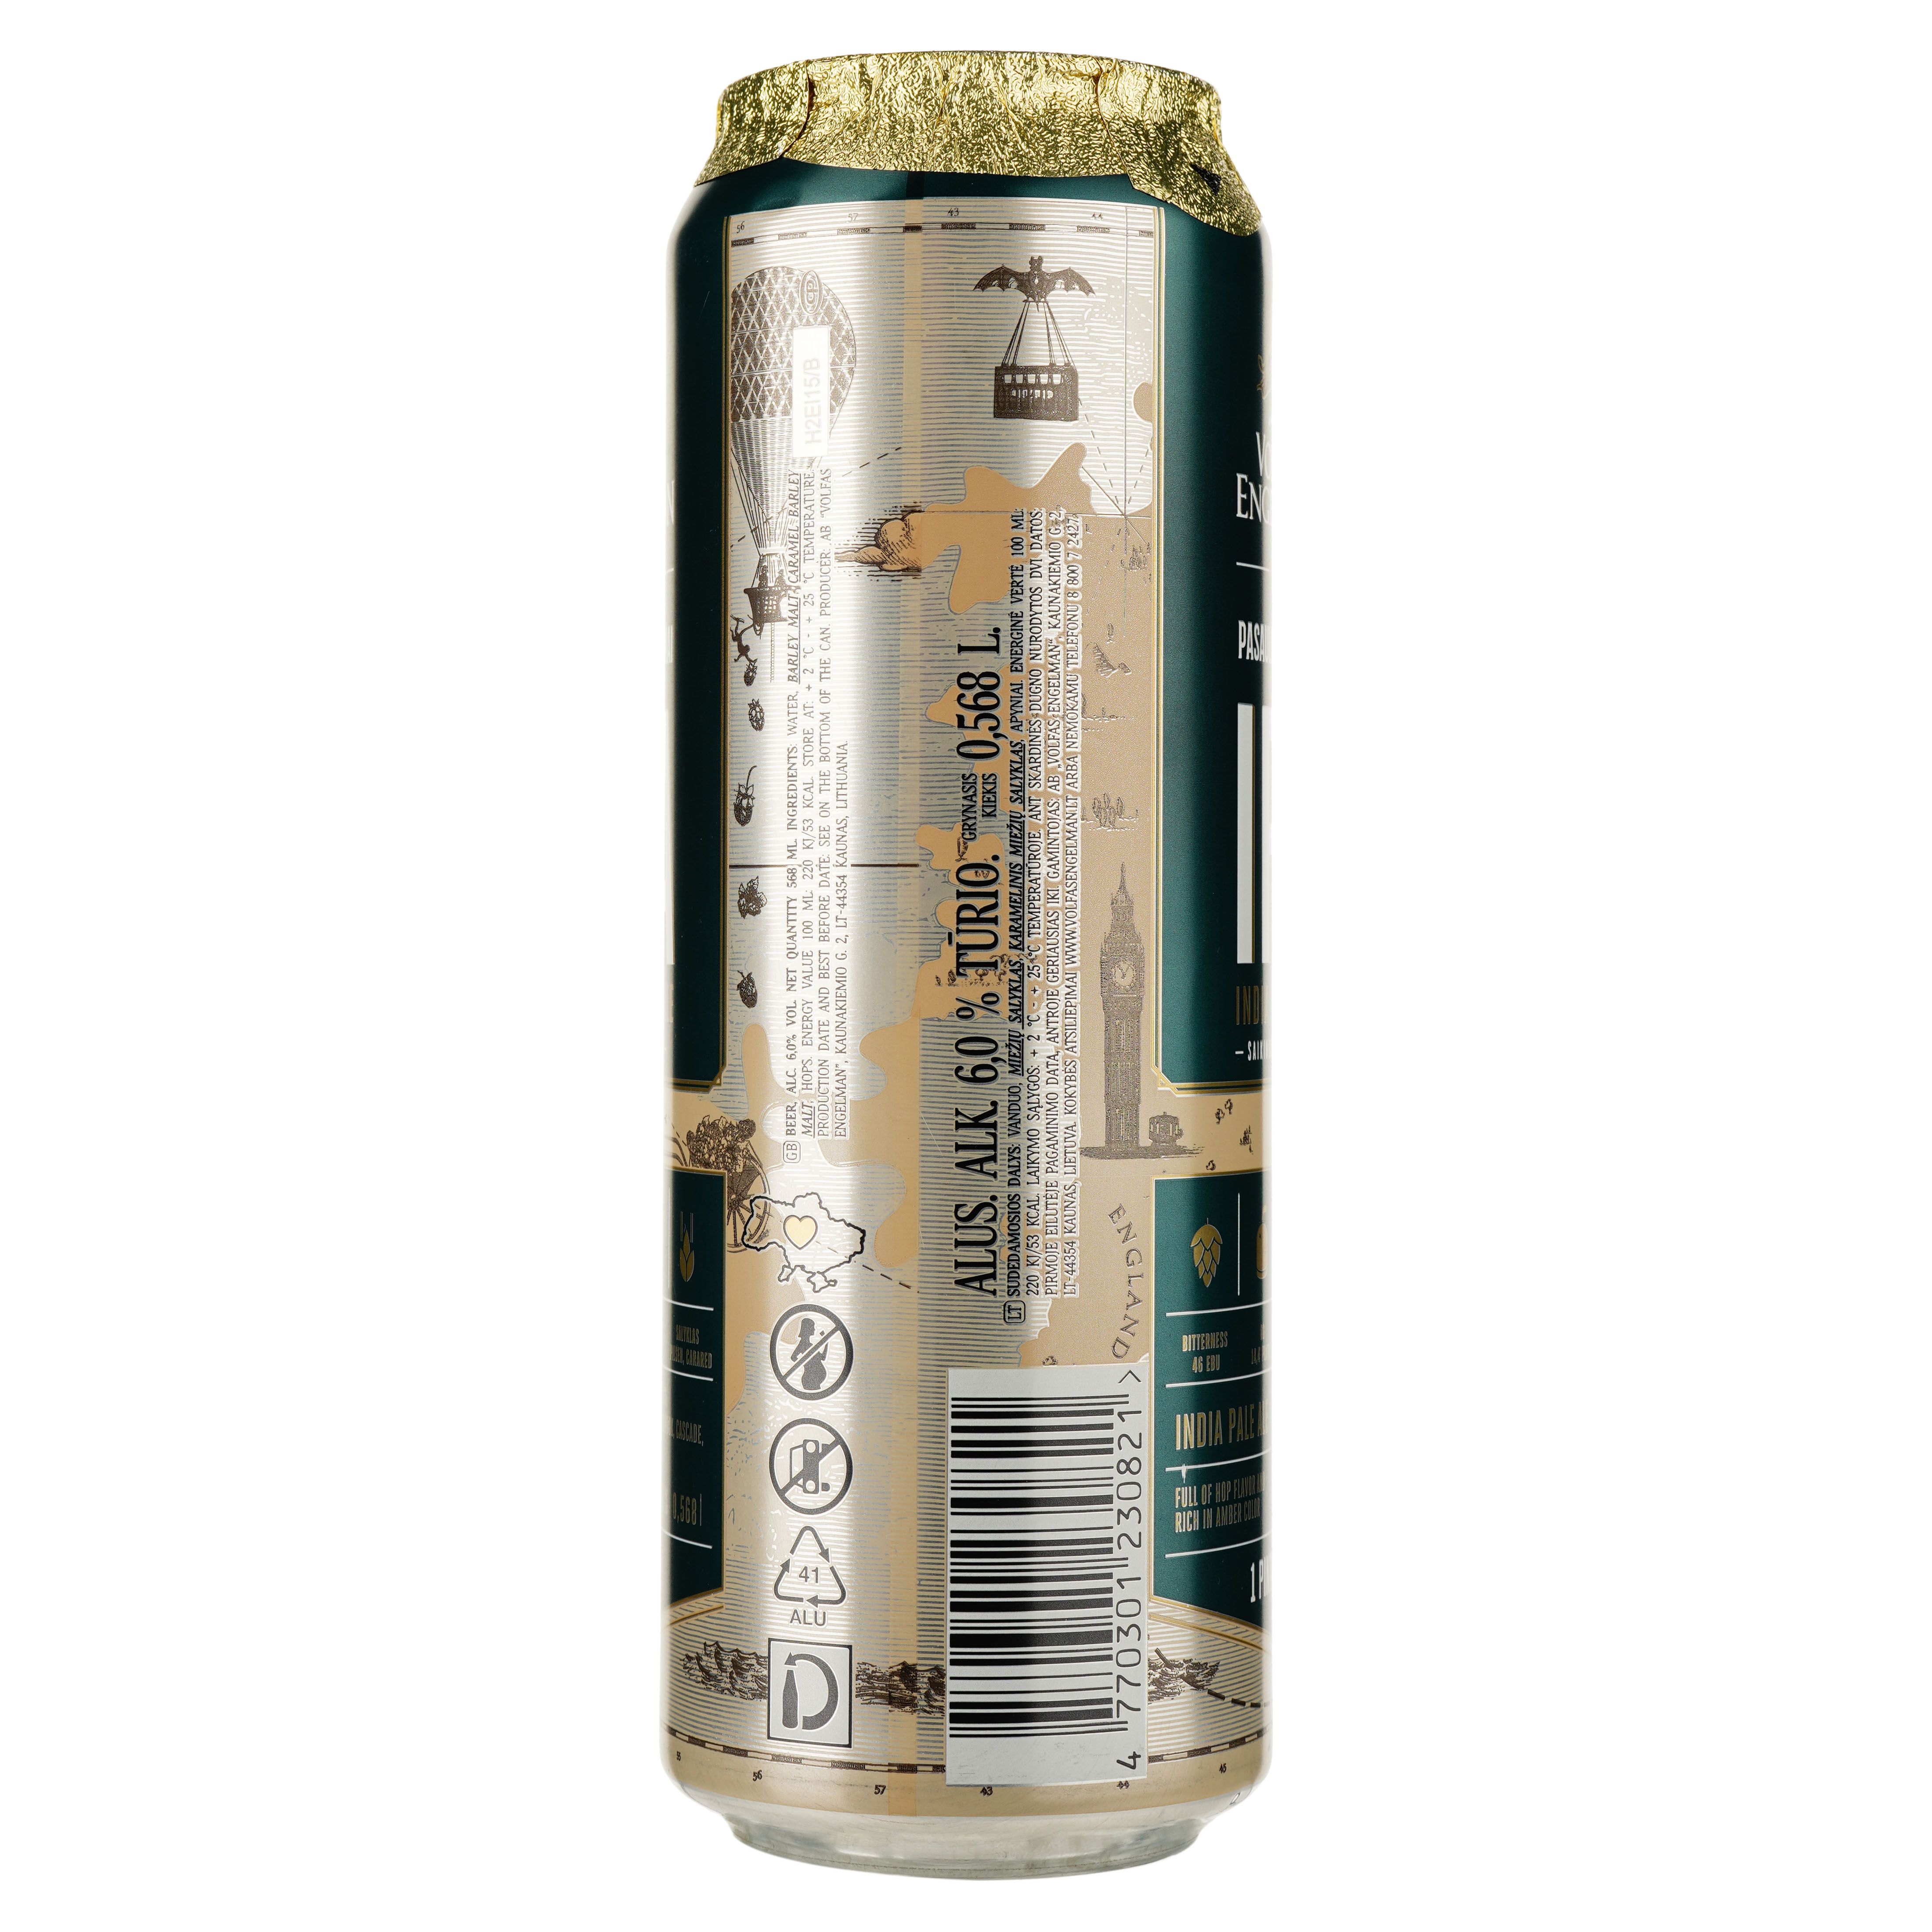 Пиво Volfas Engelman IPA, янтарное, 6%, ж/б, 0,568 л (822035) - фото 2